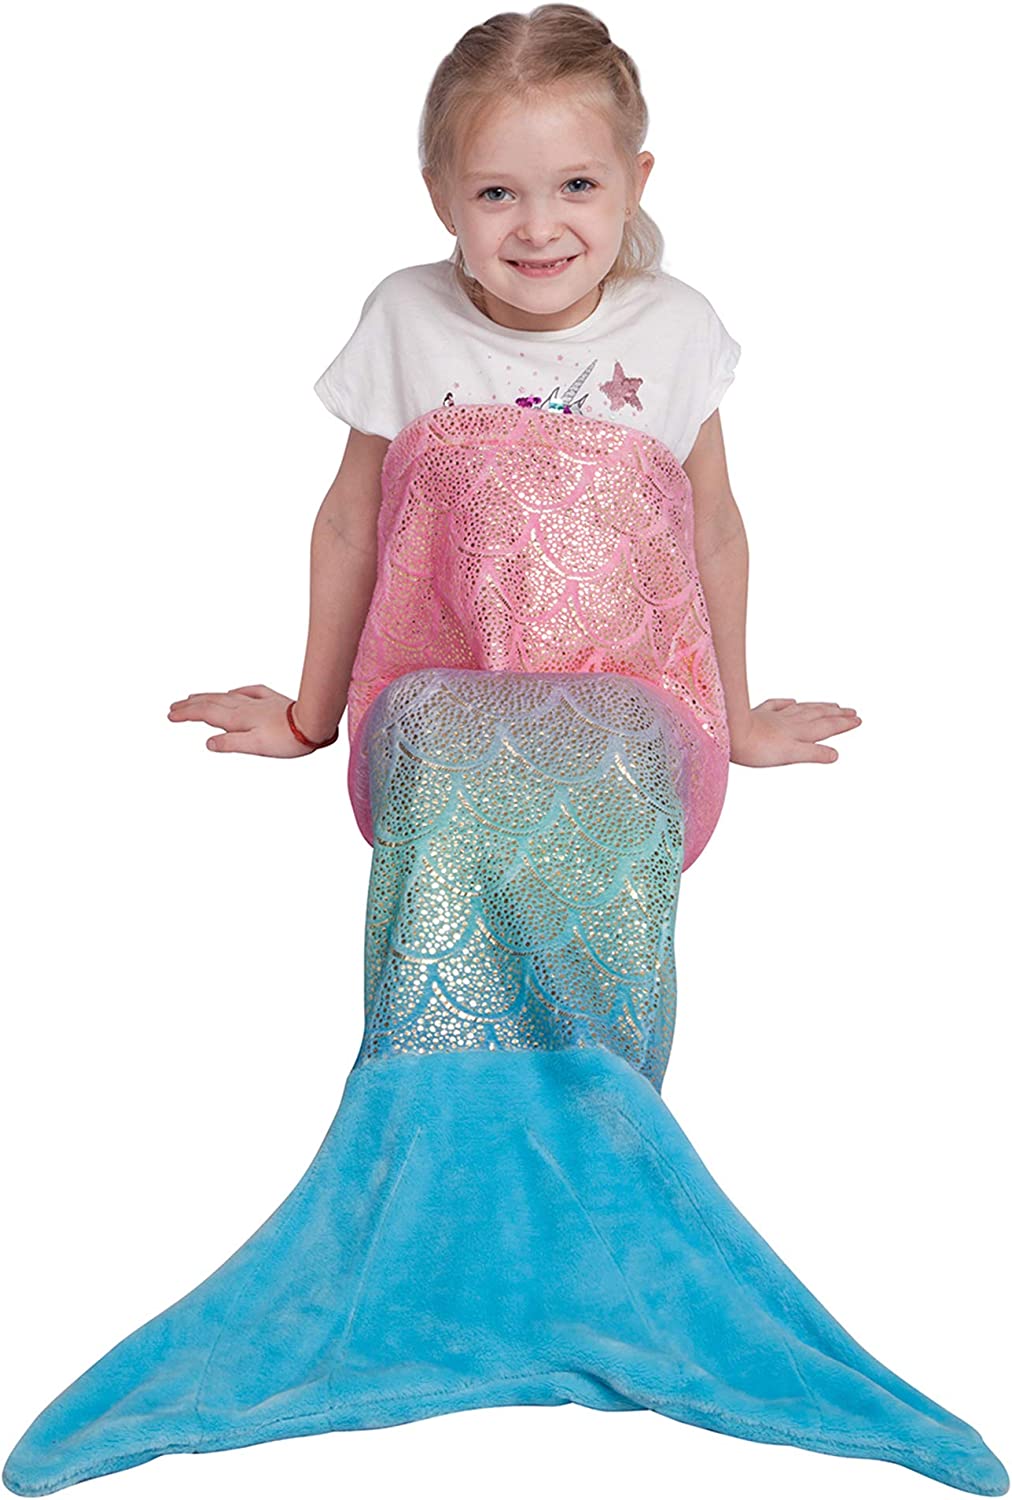 Softan Rainbow Mermaid Embossed Blue Tail Blanket both for Adults and Kids